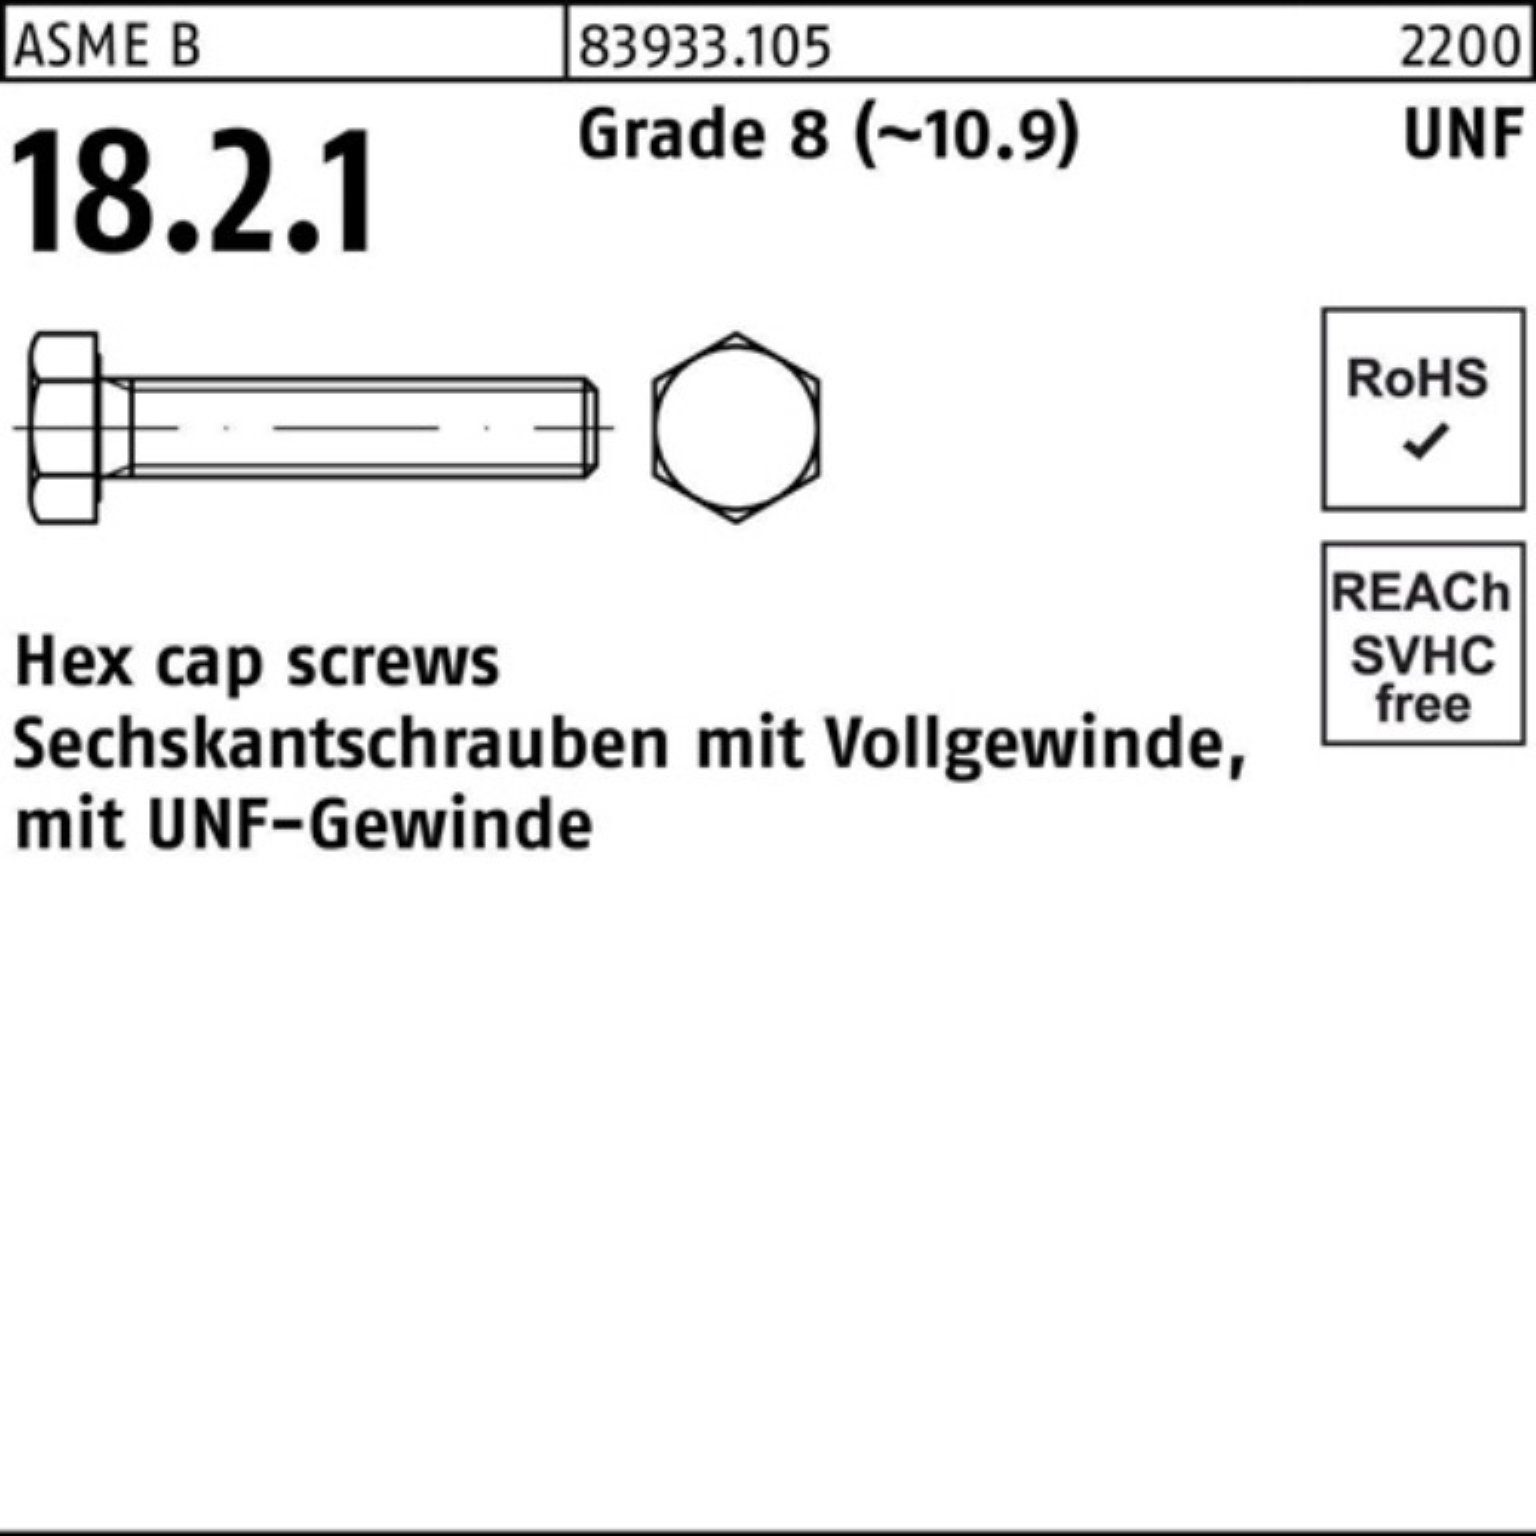 Reyher Sechskantschraube 100er Pack Sechskantschraube R 83933 UNF-Gewinde VG 7/16x 1 Grade 8